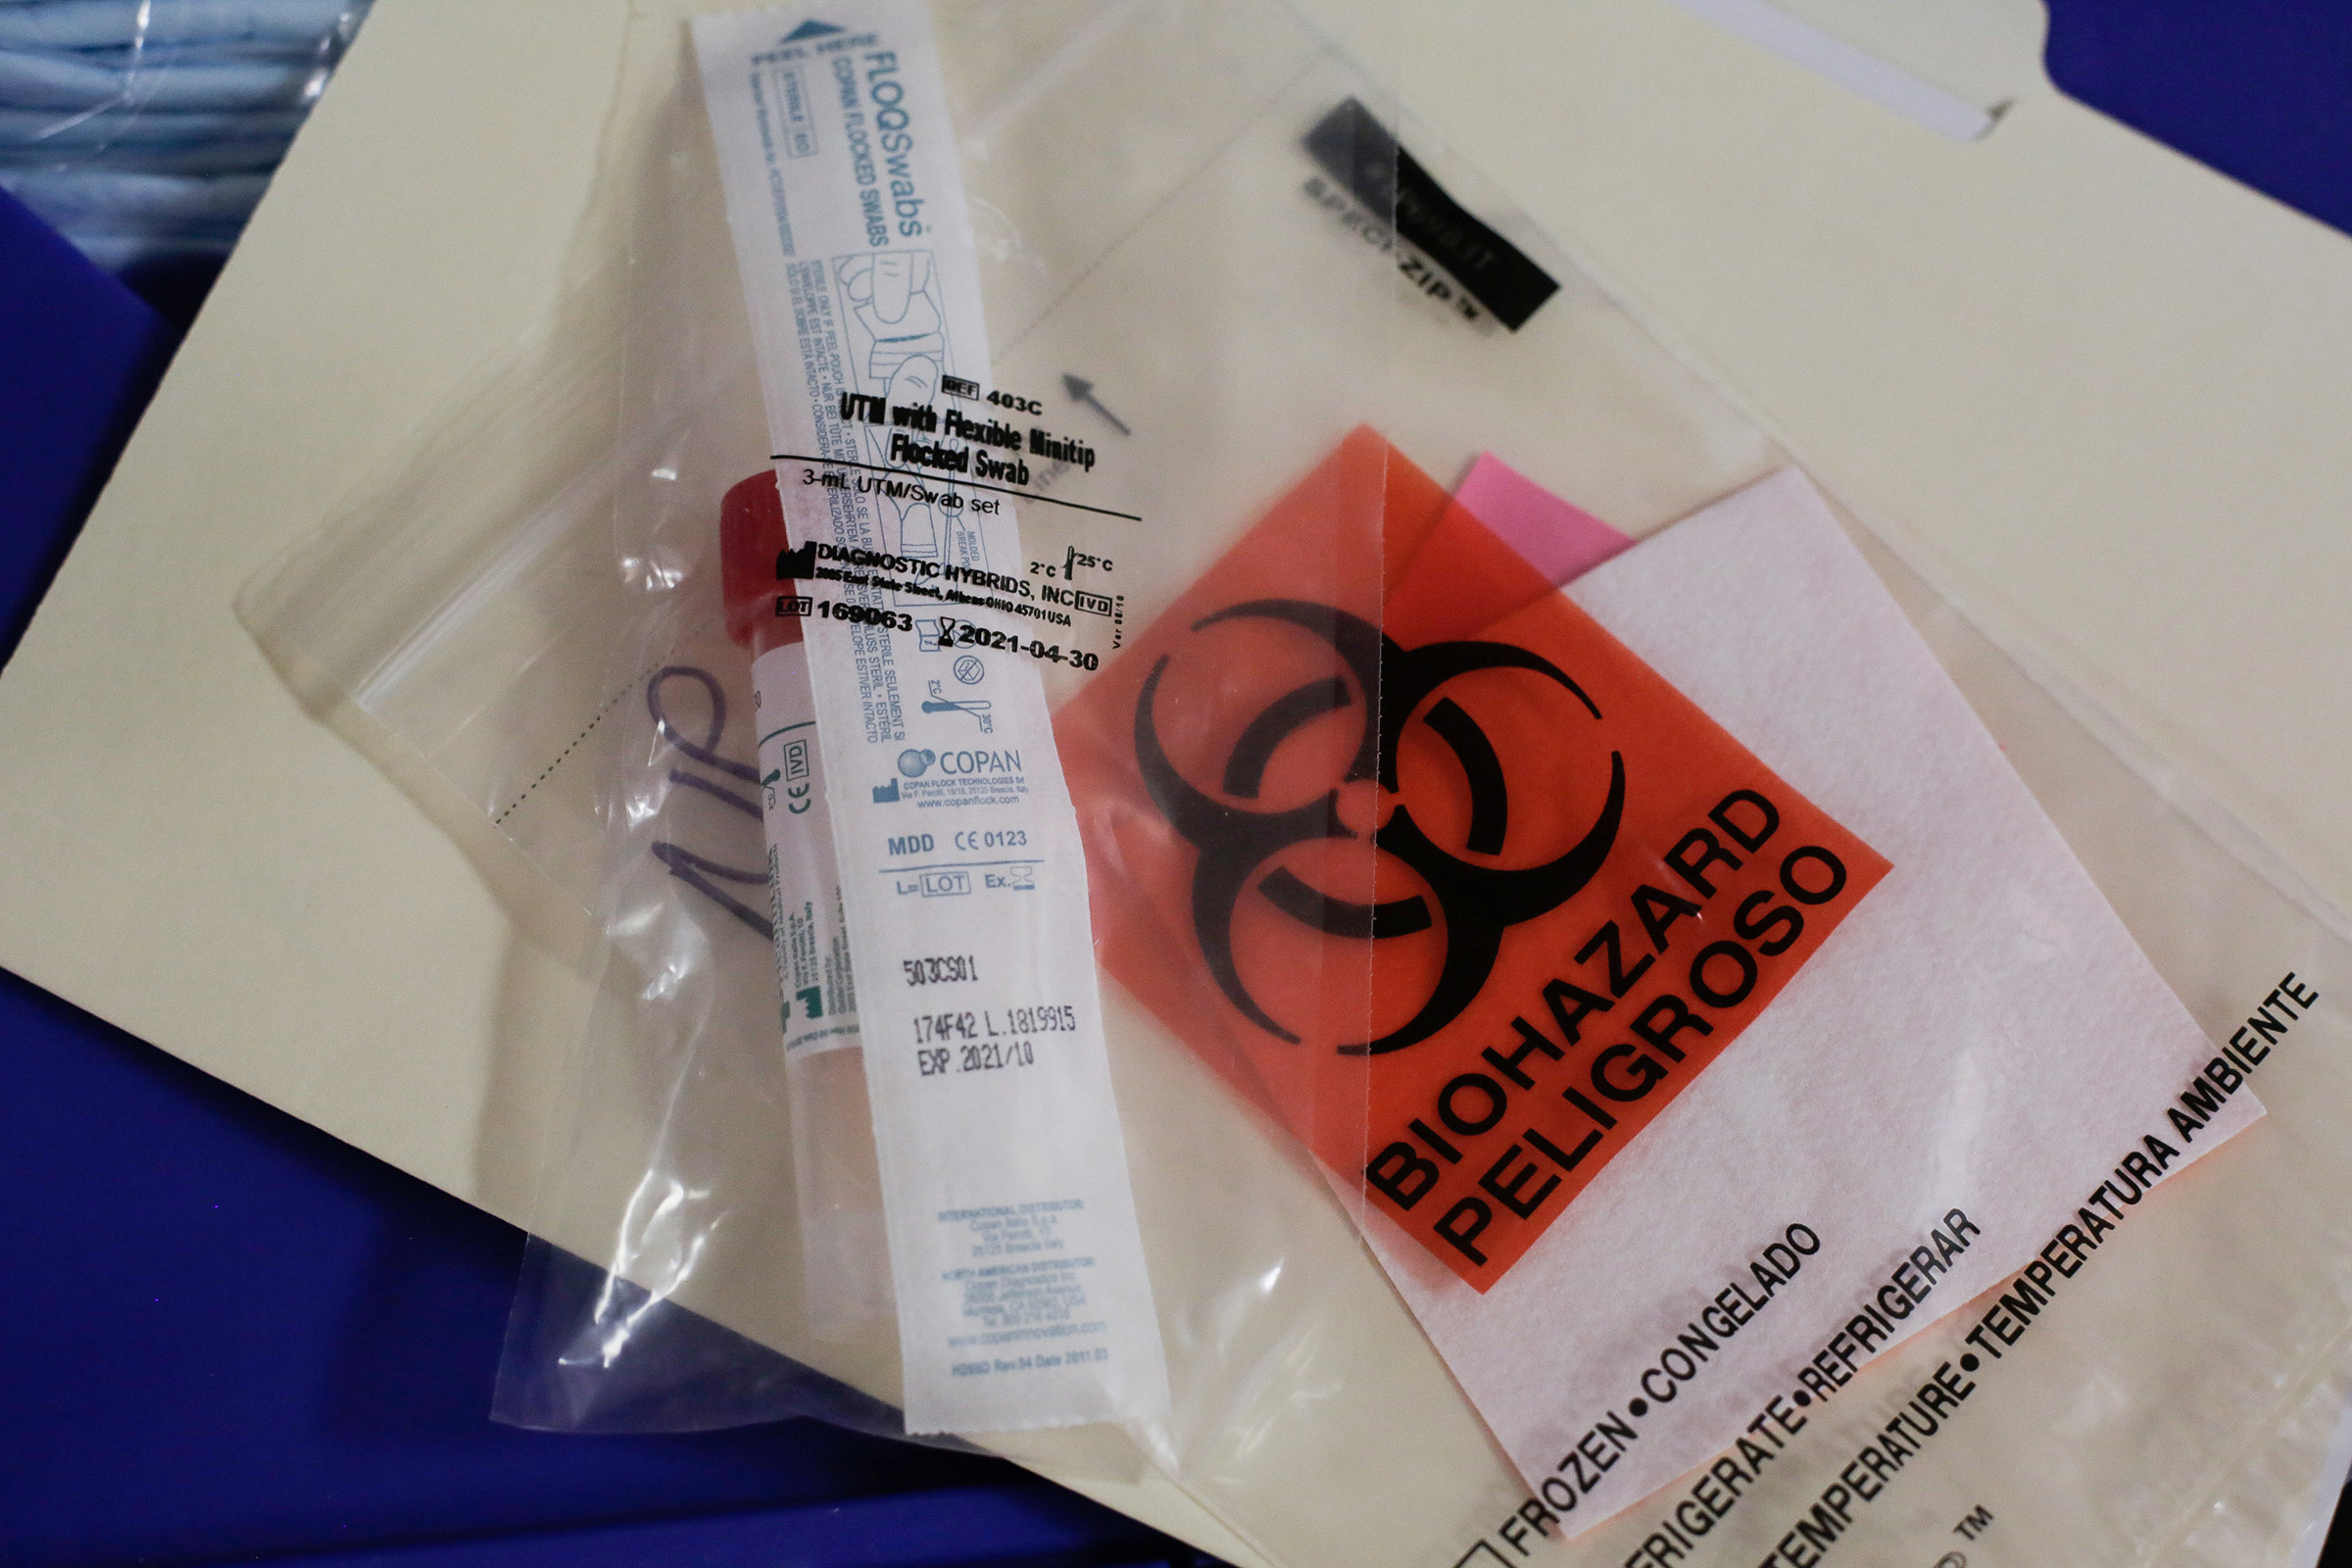 A swab for testing the novel coronavirus at Harborview Medical Center in Seattle, Washington on Feb. 29, 2020. (David Ryder—Reuters)